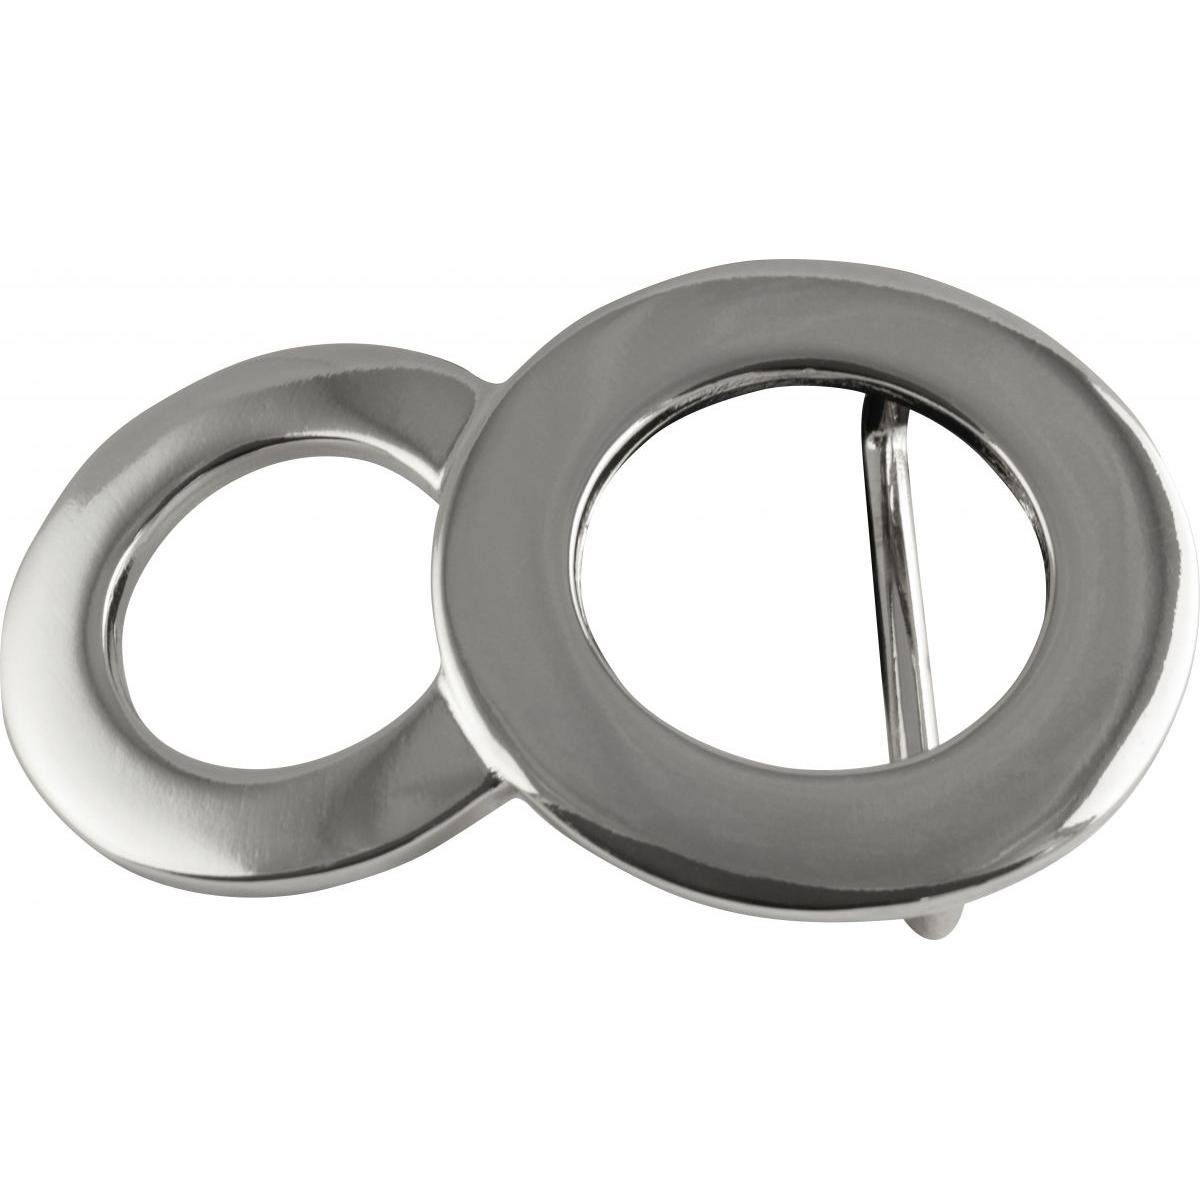 4,0 40mm - BELTINGER Gürtel - Silber cm Wechselschließe glänzend Buckle Gürtelschließe Gürtelschnalle bis Ringe